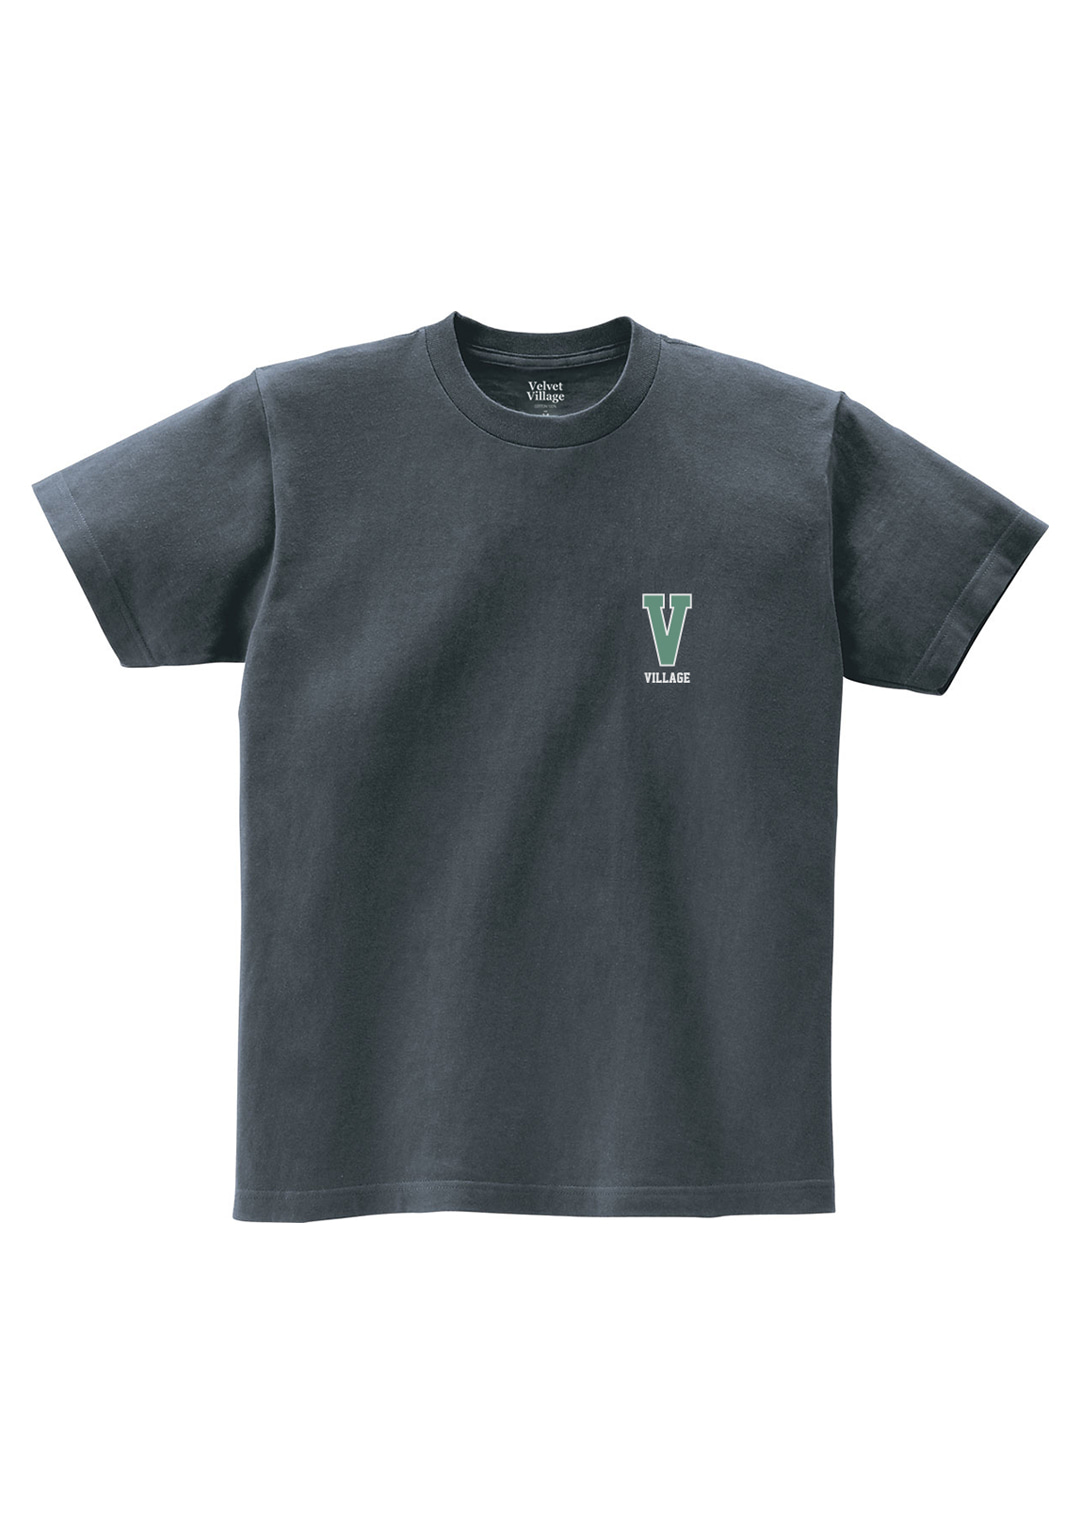 V-village T-shirts (Charcoal)